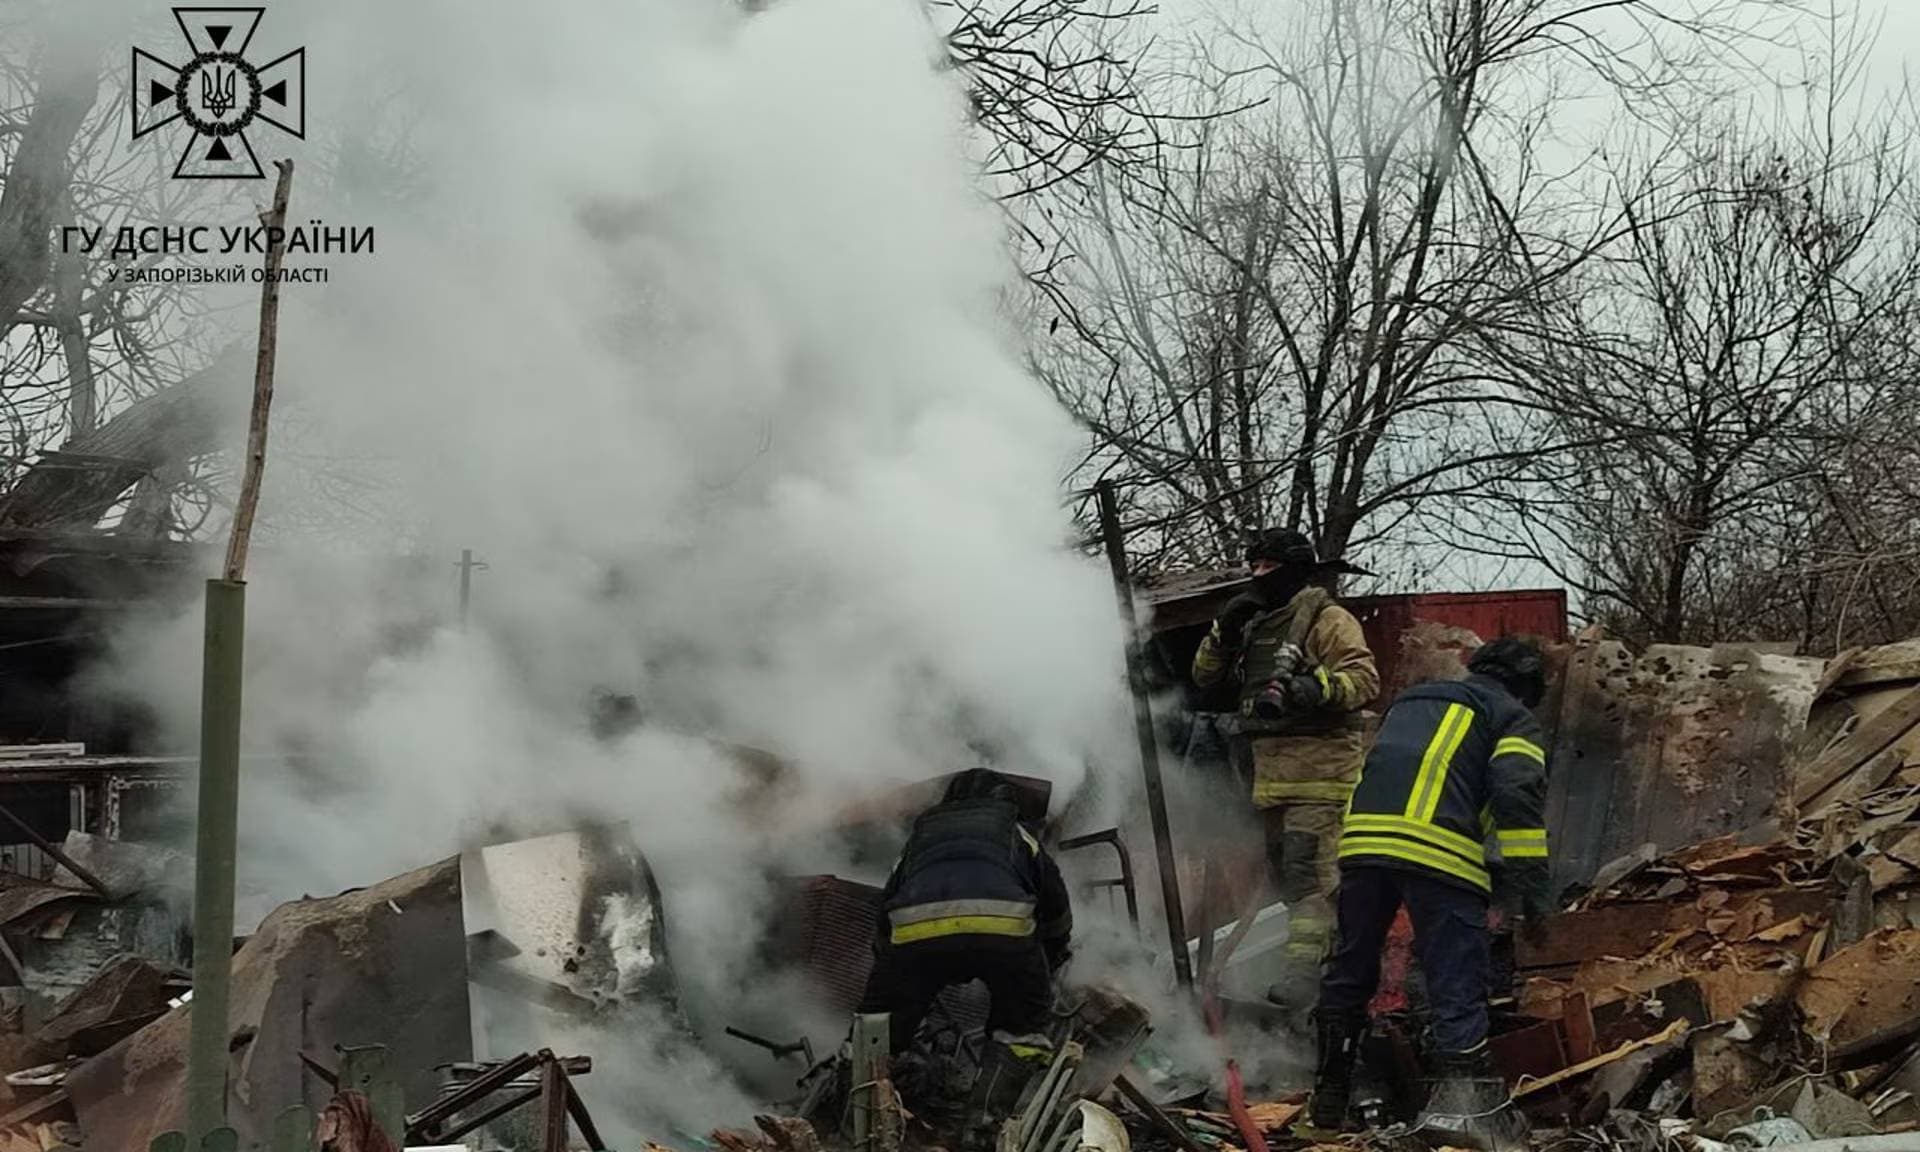 Firefighters at the scene after a Russian drone strike in Zaporizhzhia region